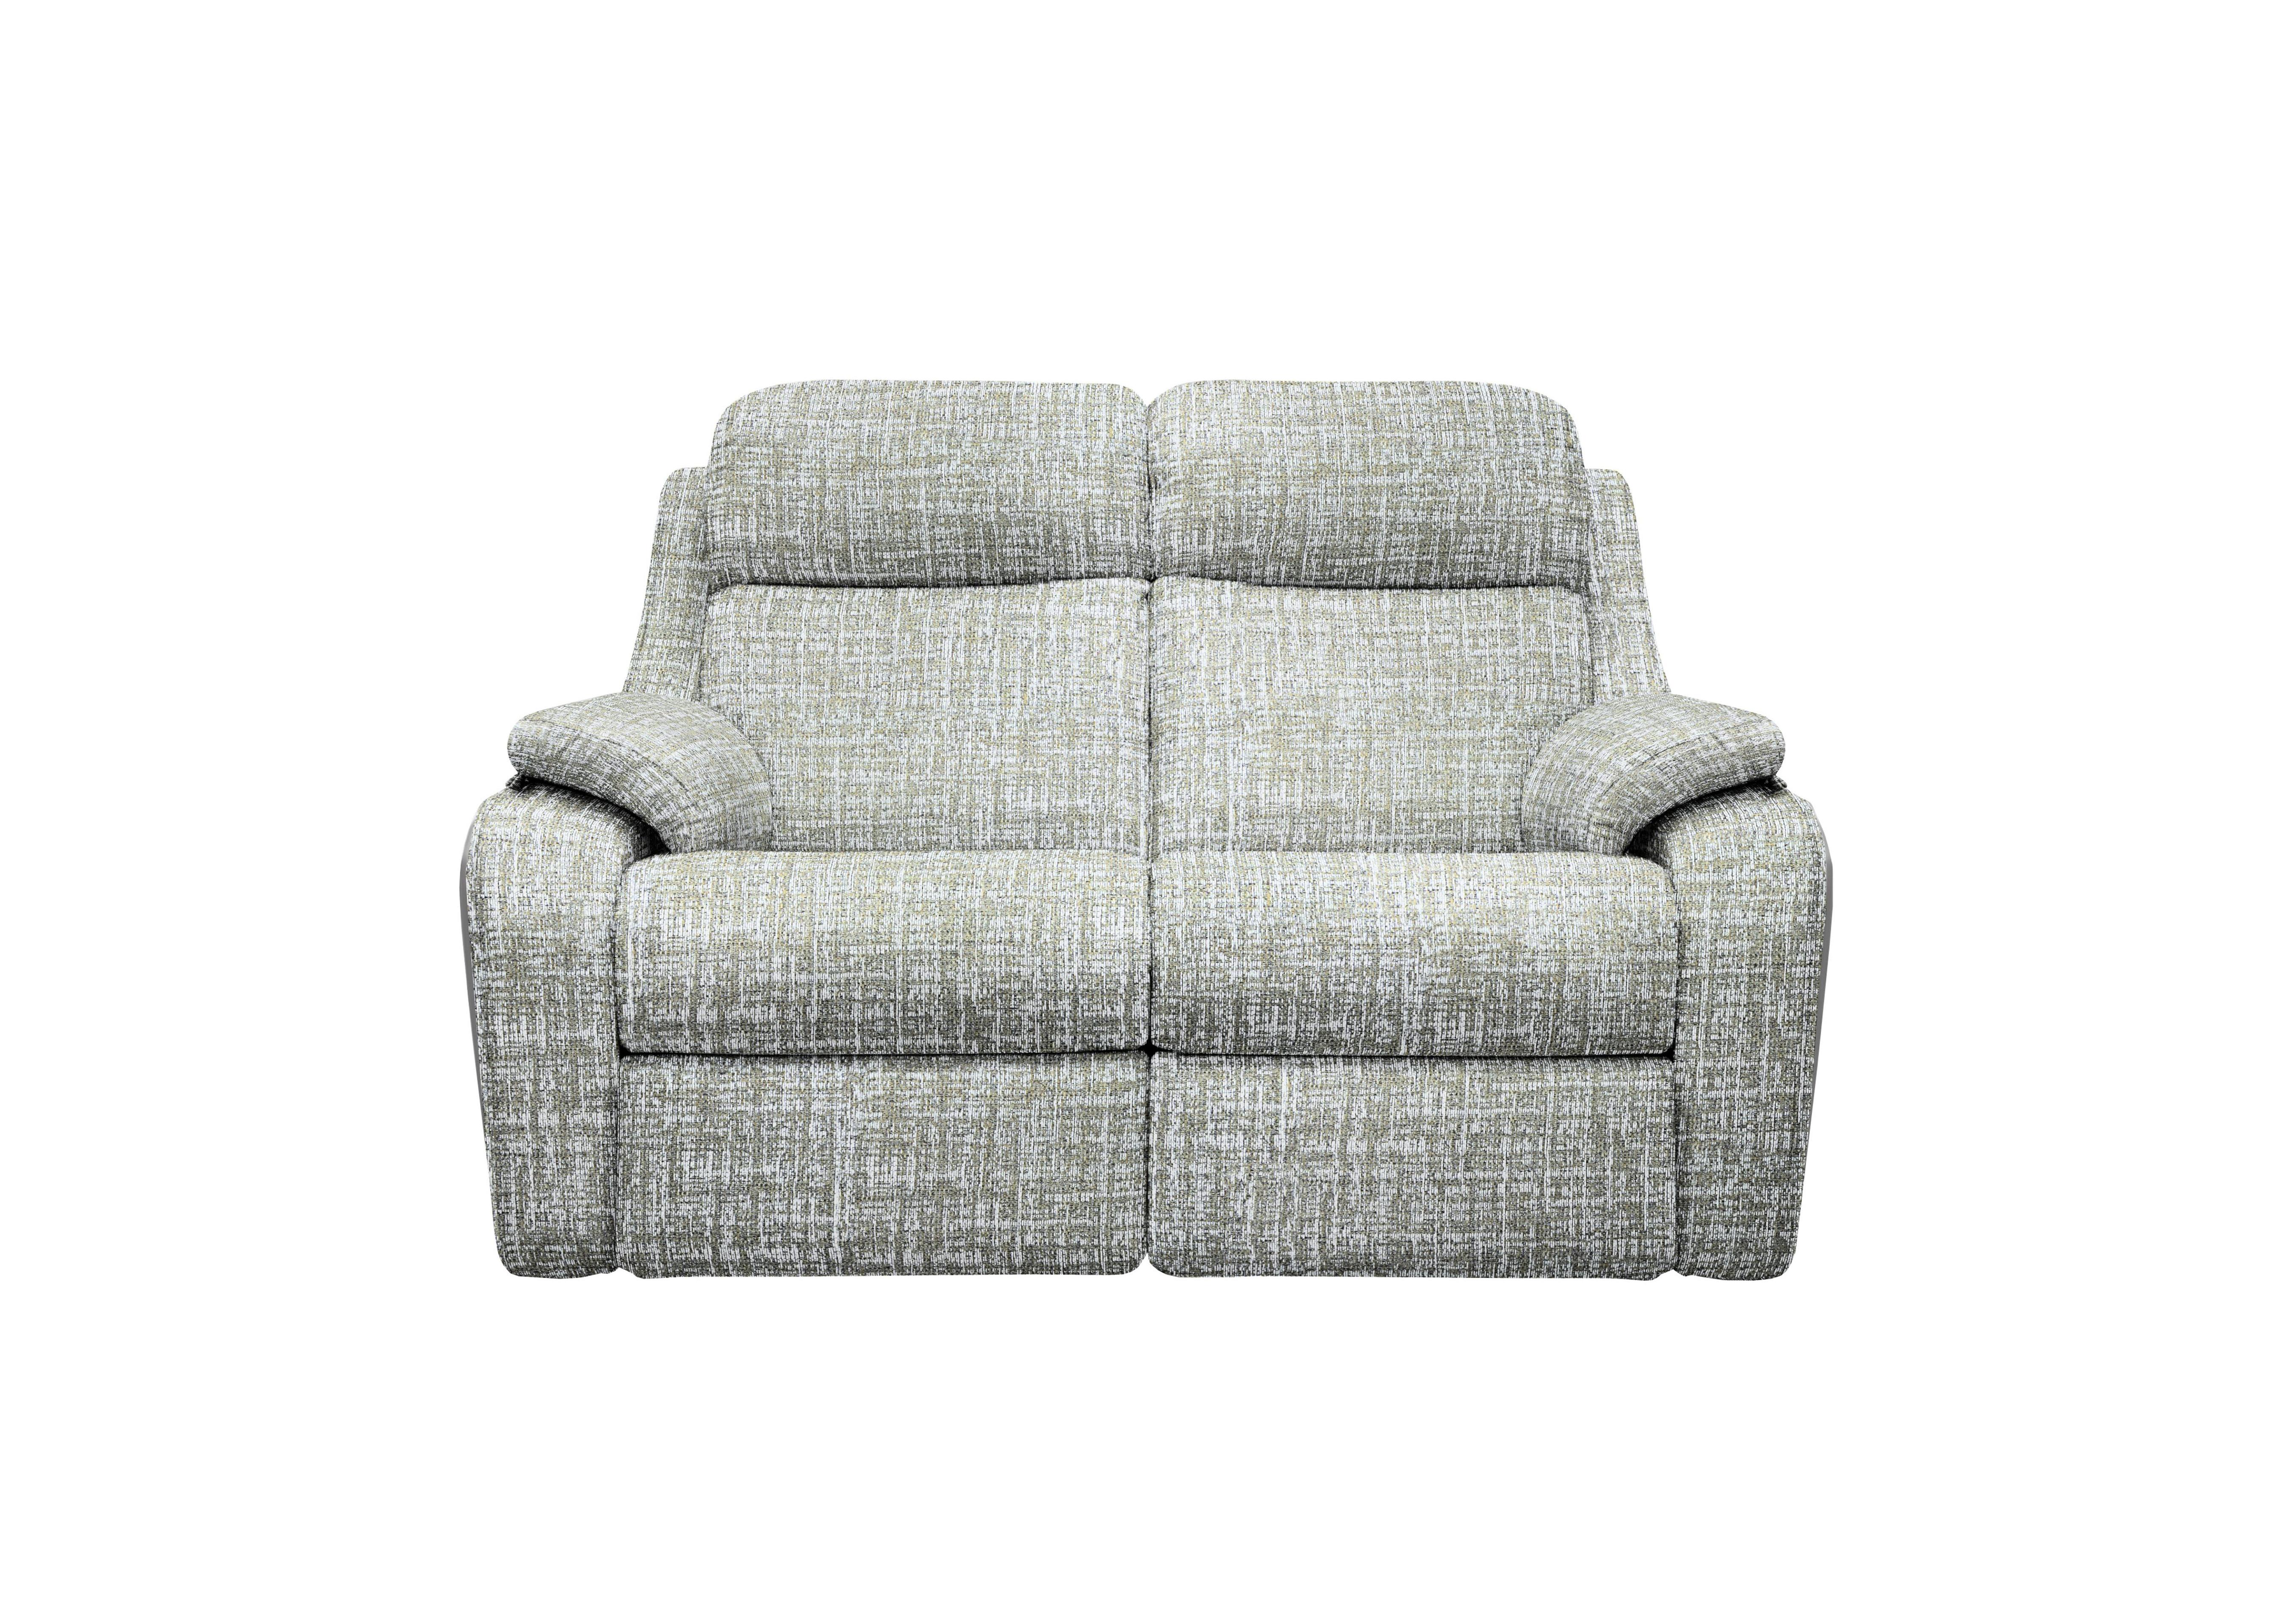 Kingsbury 2 Seater Fabric Sofa in B102 Shore Oatmeal on Furniture Village